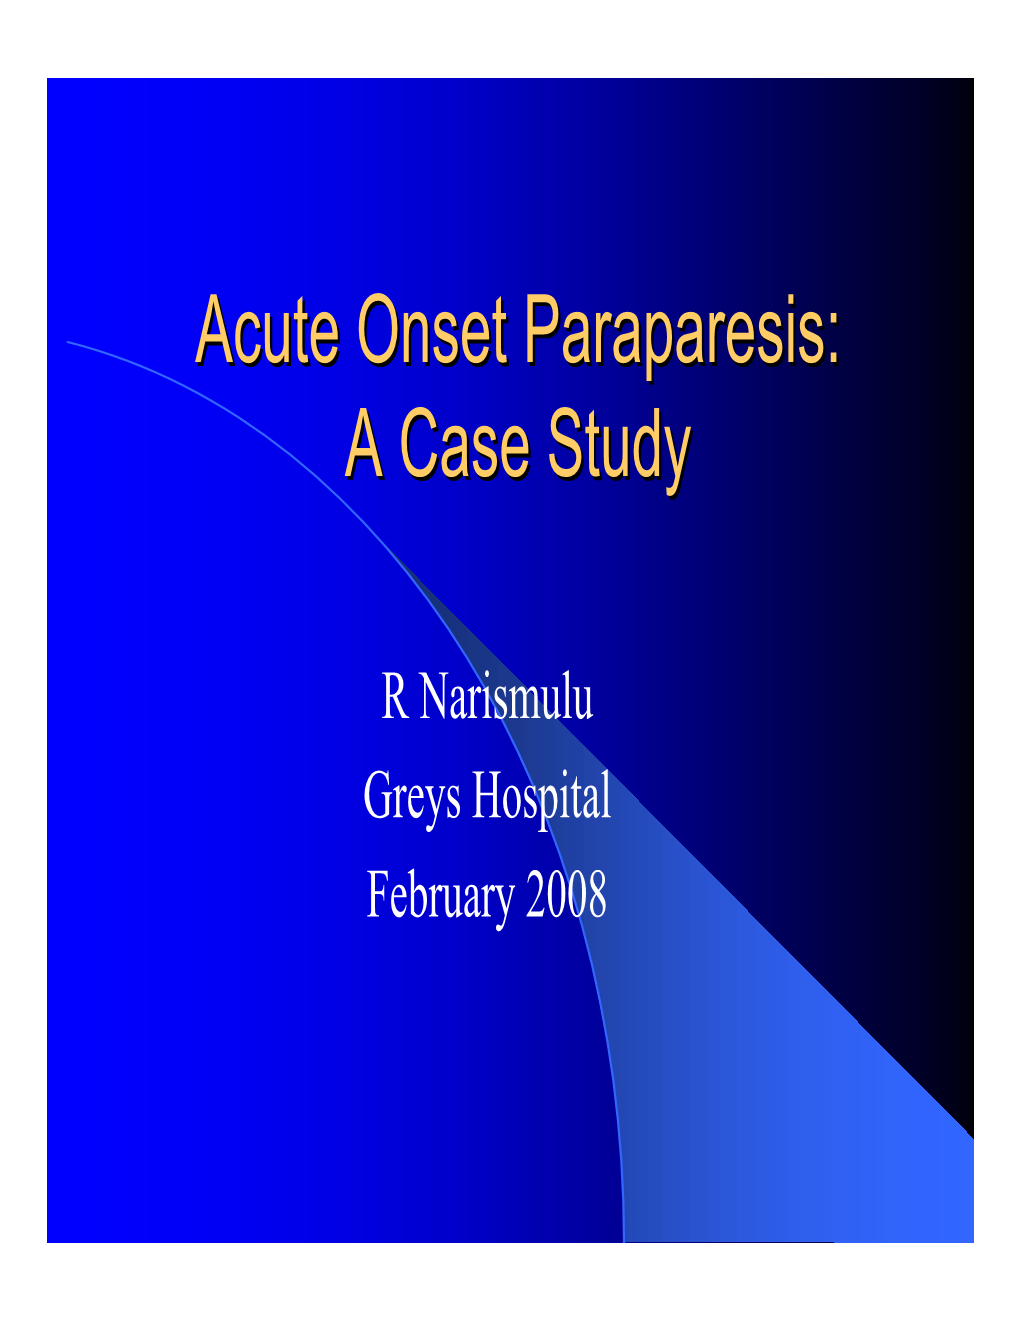 Acute Onset Paraparesis: a Case Study